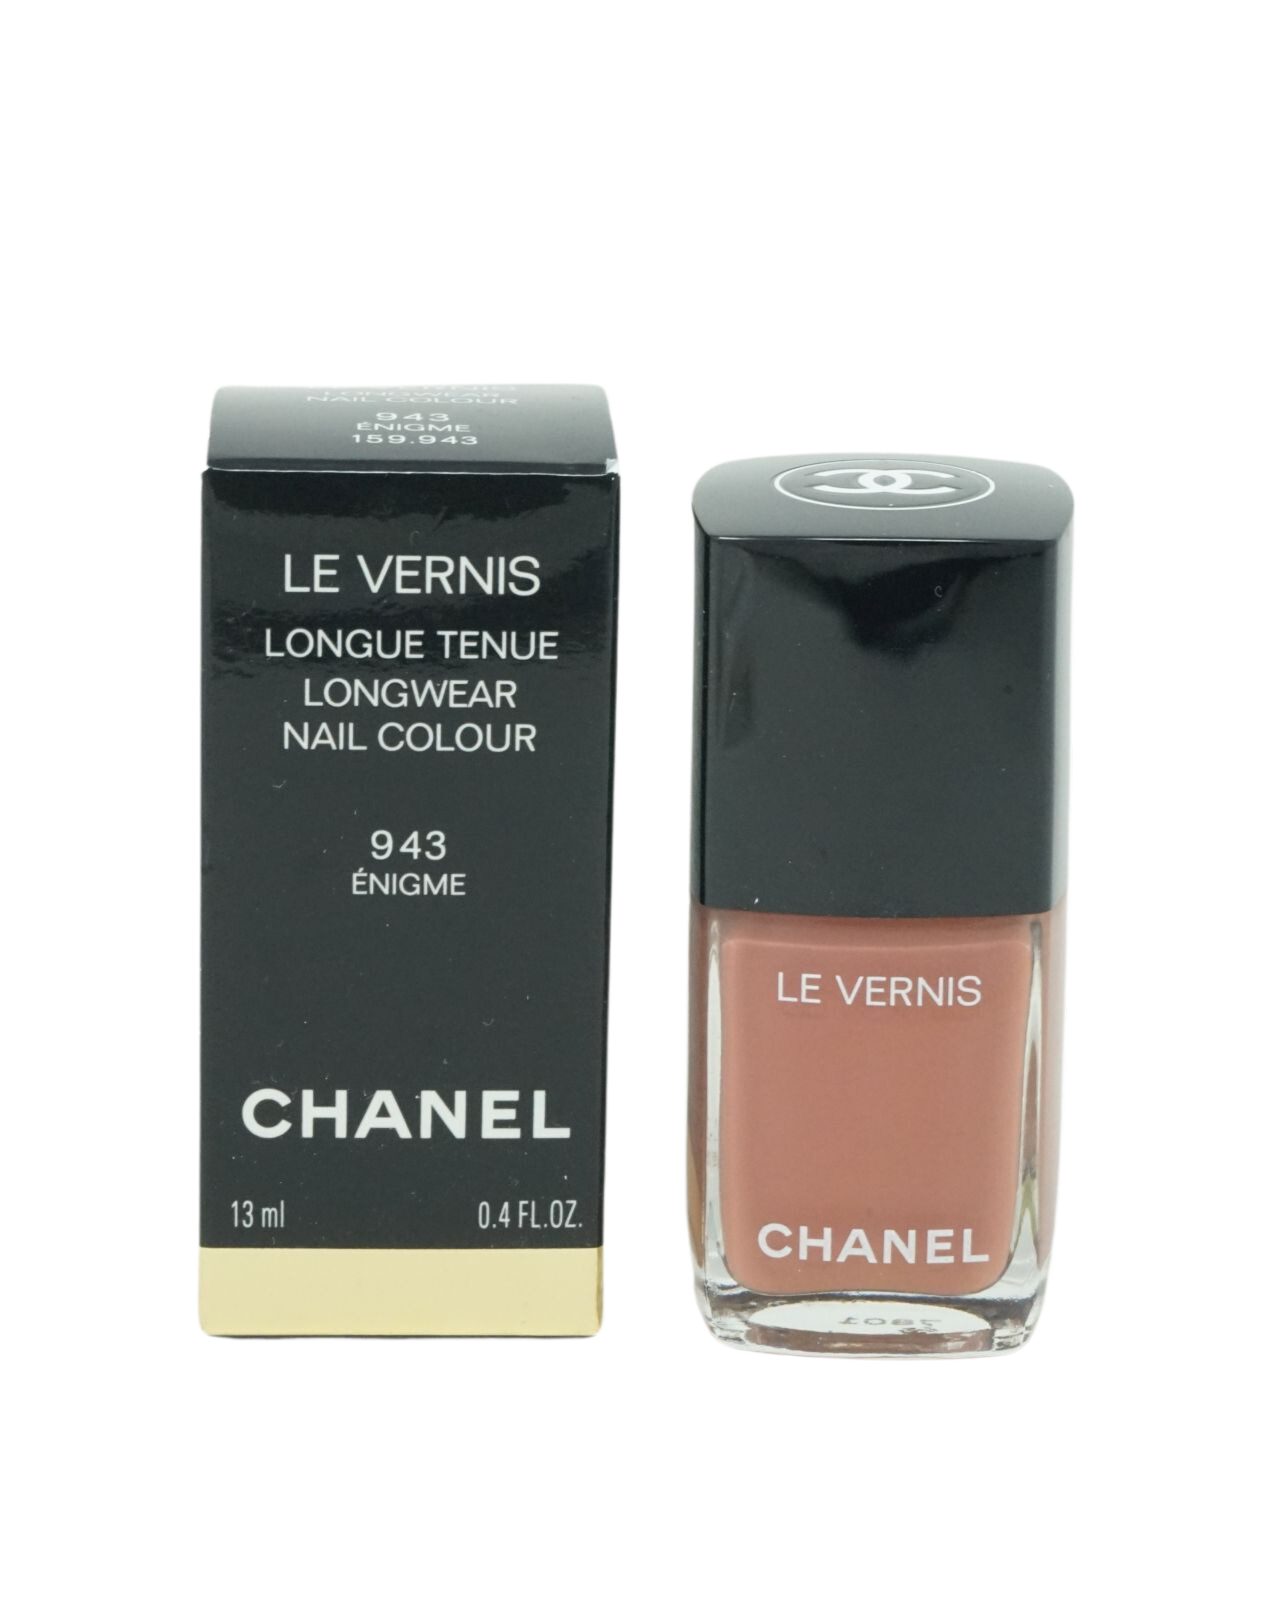 CHANEL Nagellack Chanel Le Vernis Longwear Nagellack 13ml 943 Enigme